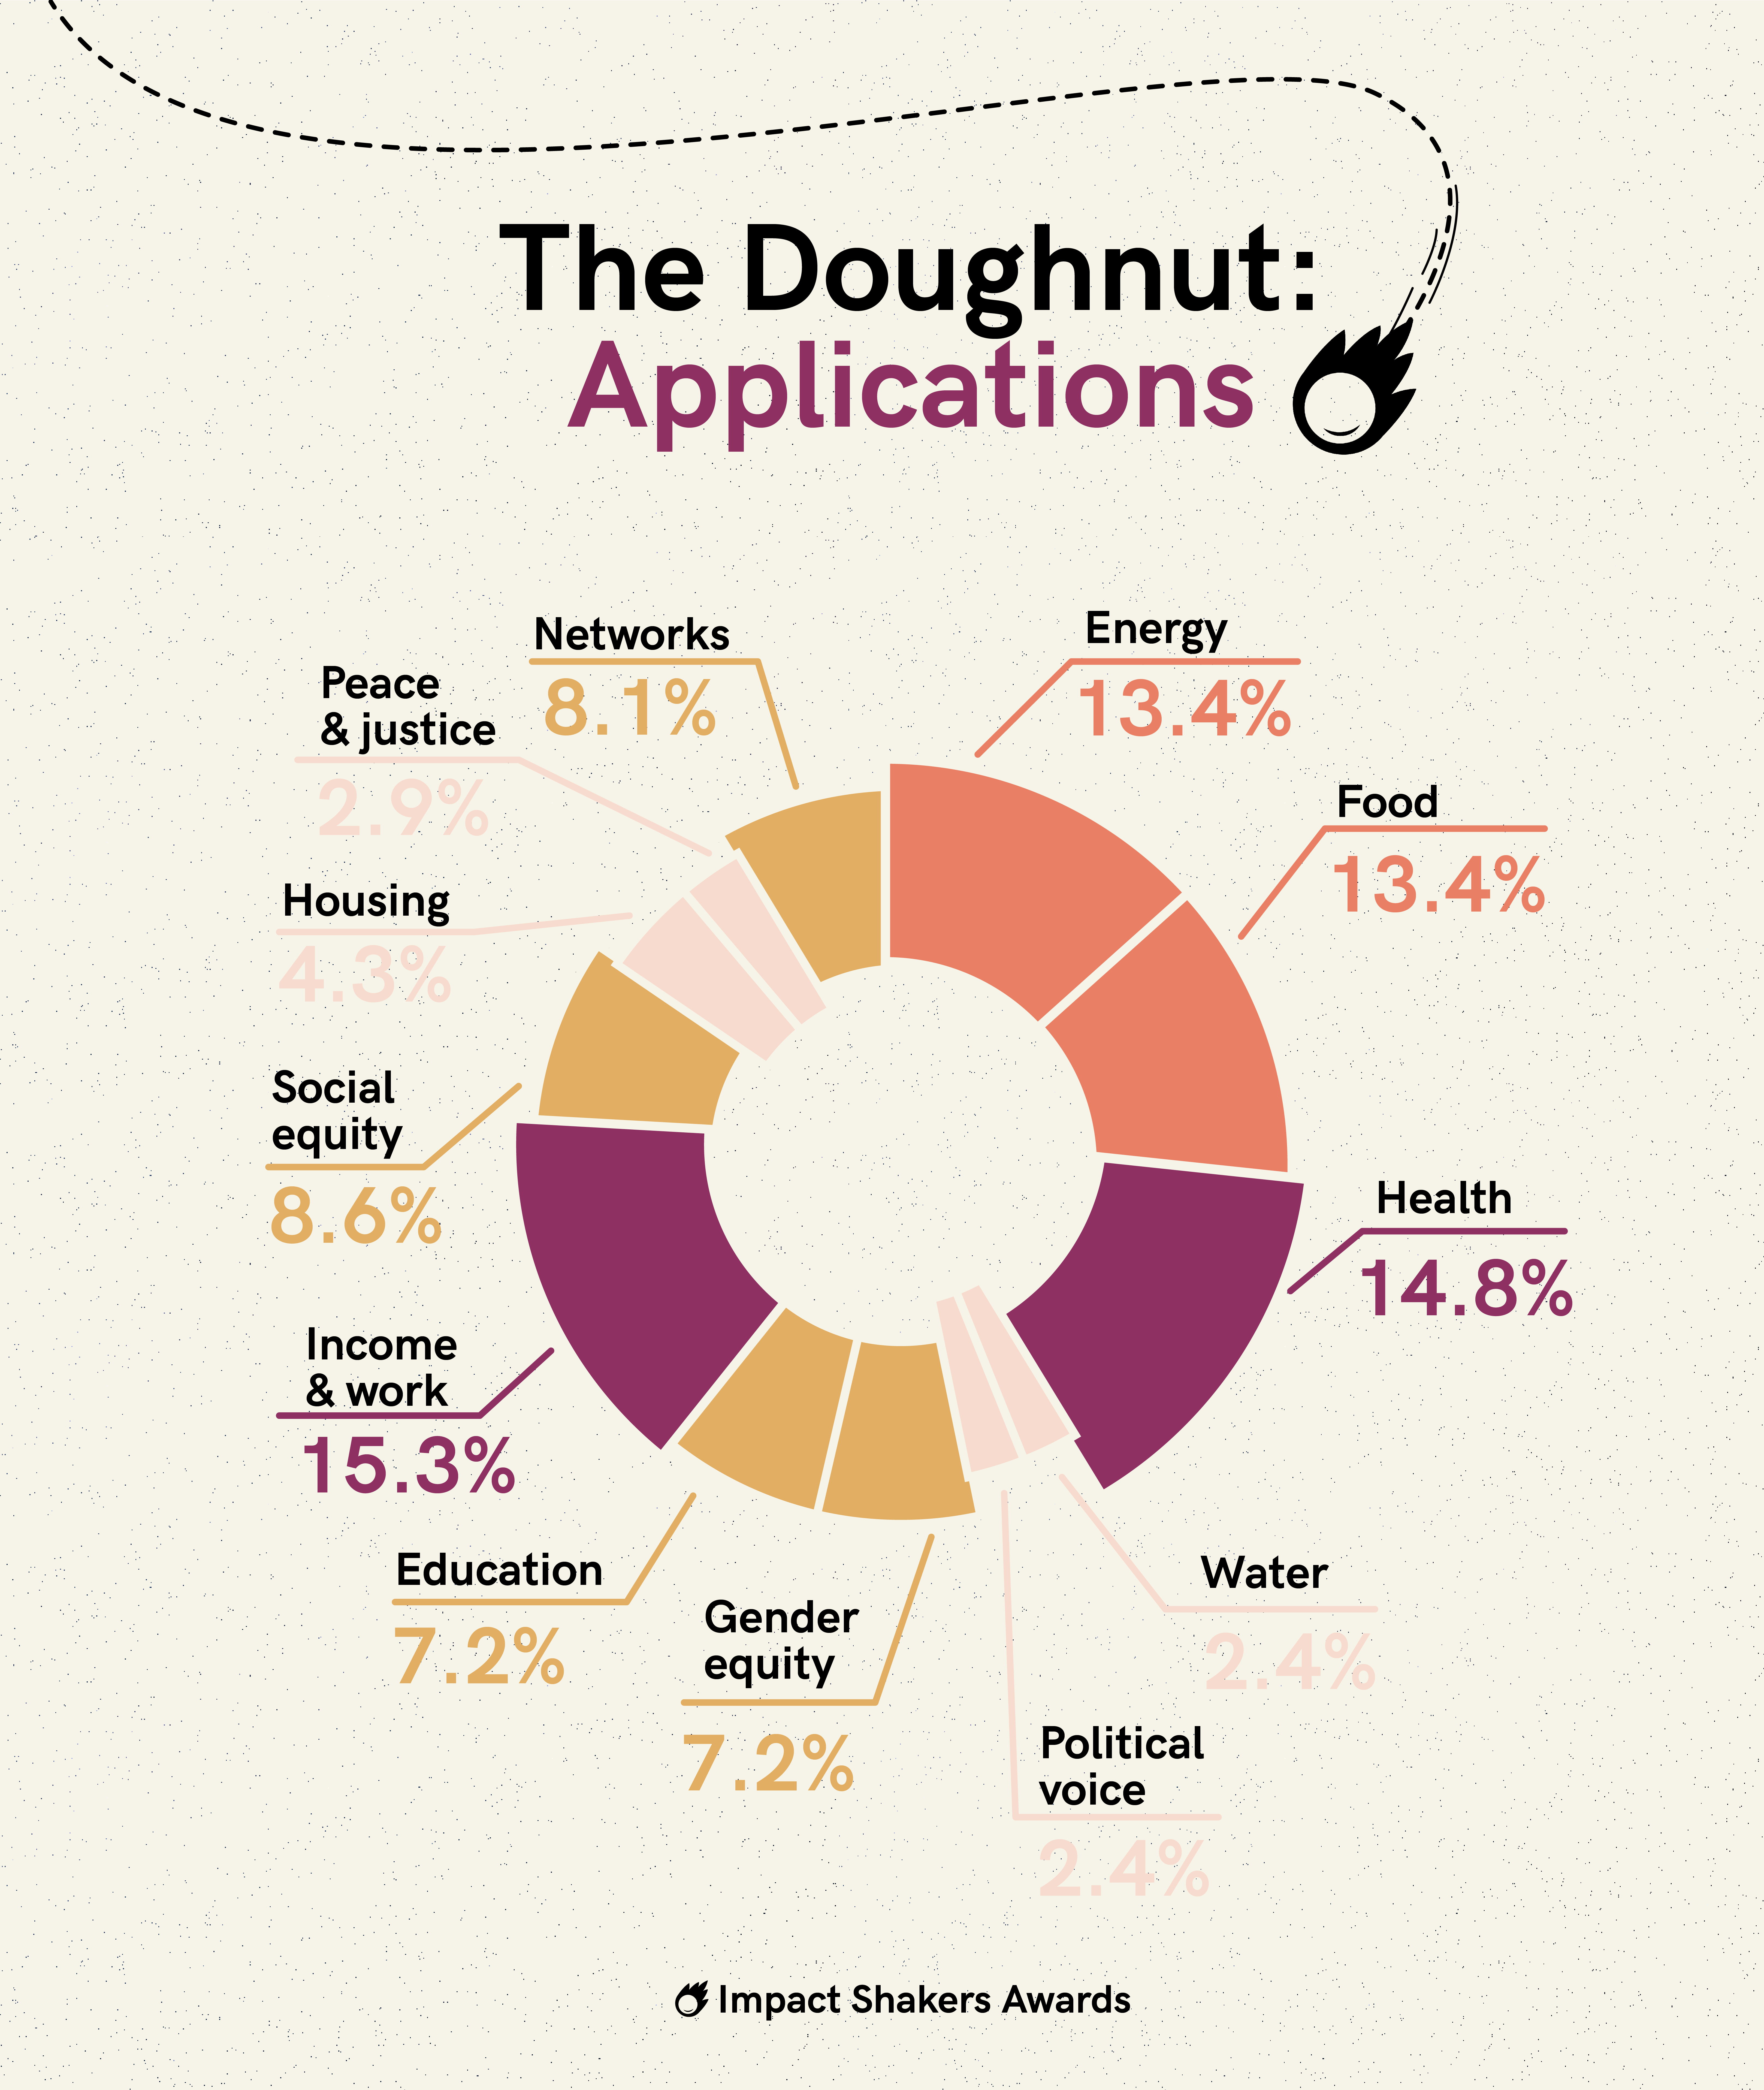 The Doughnut model: applications